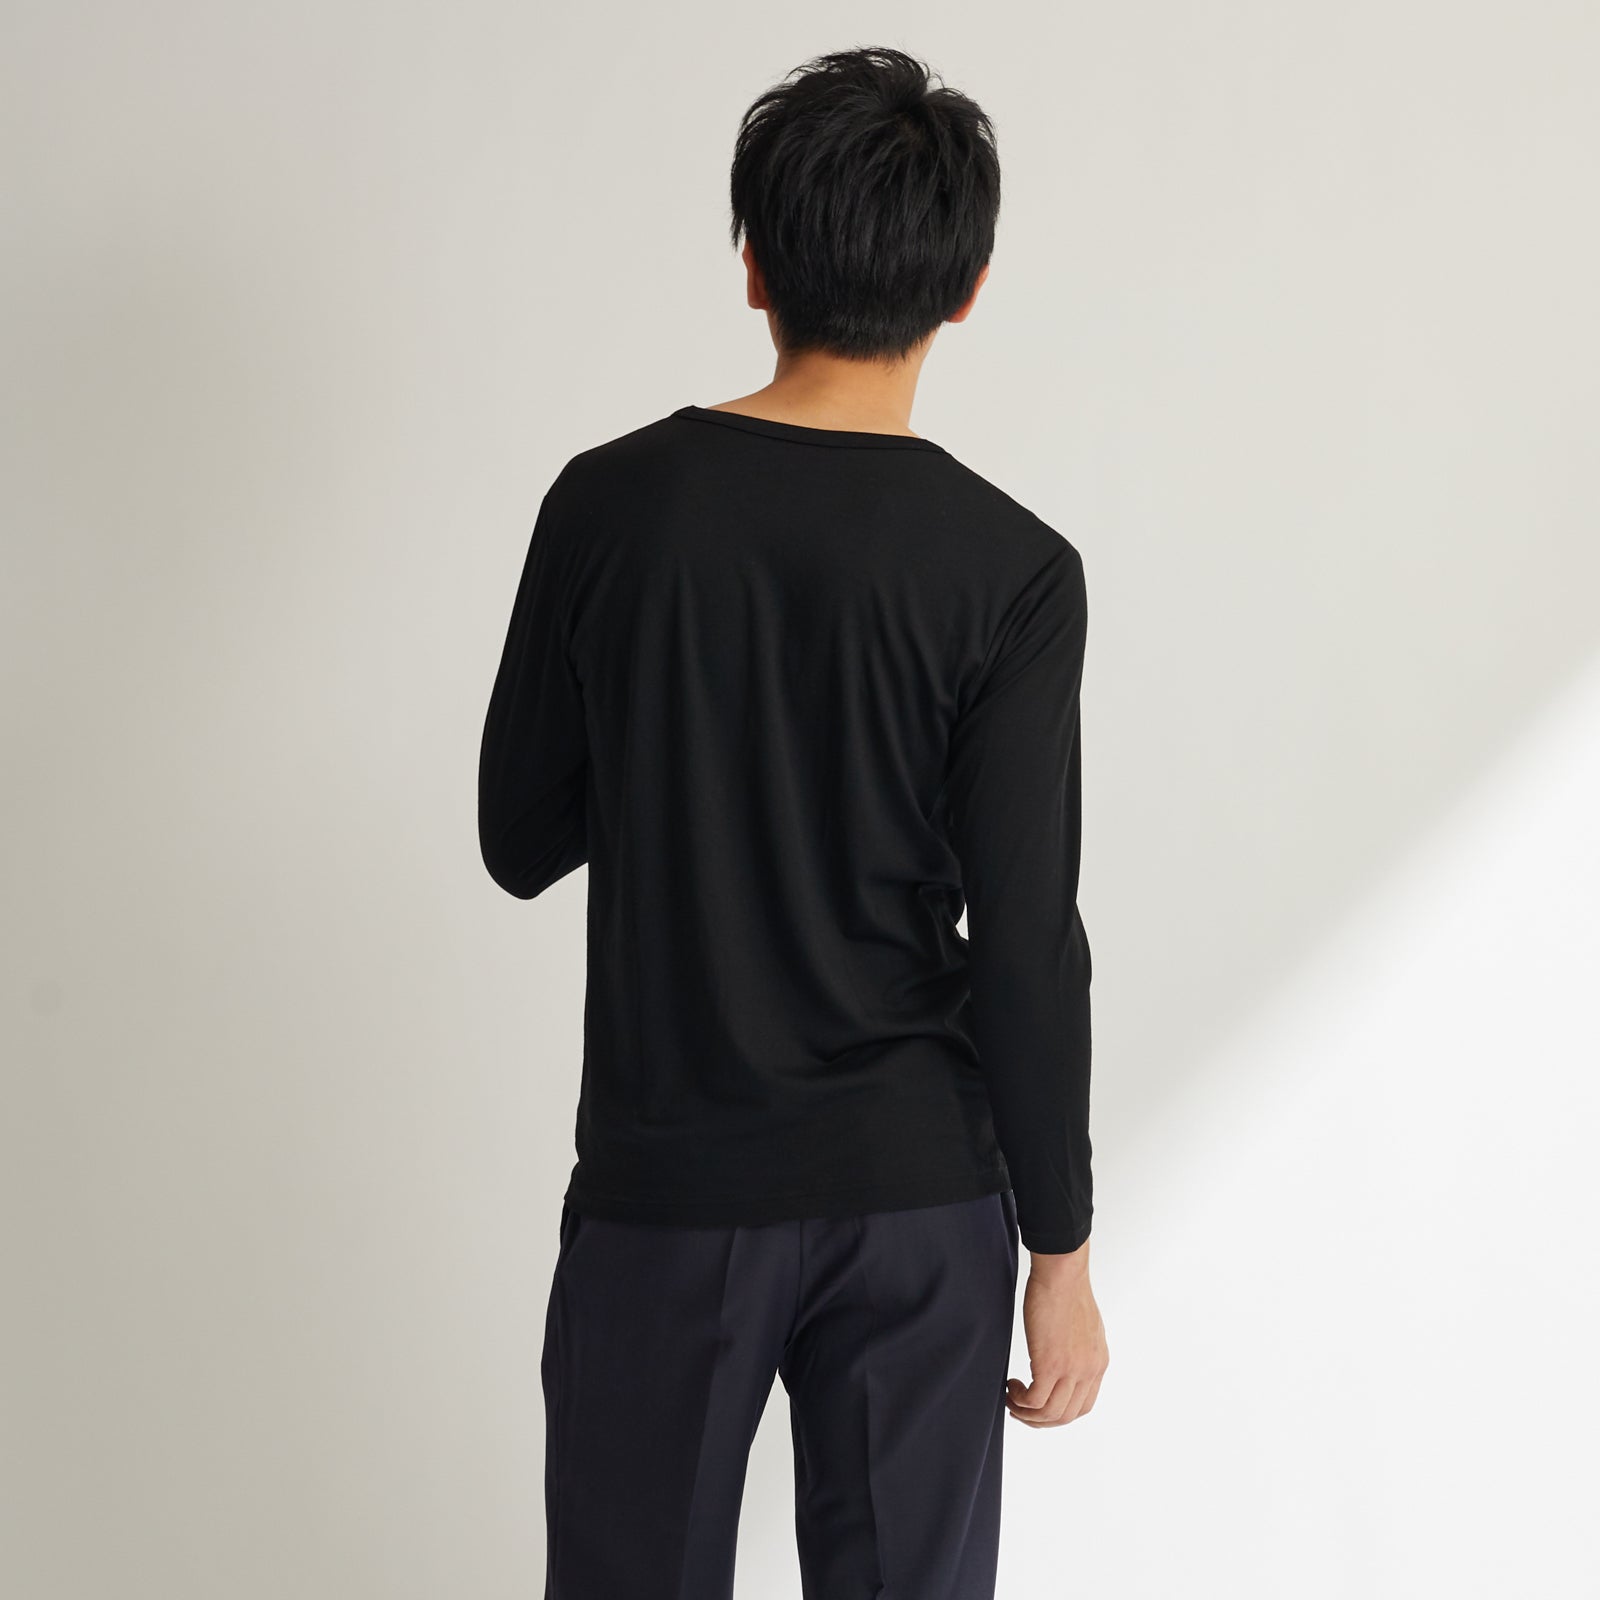 Men's 100% Merino Wool Jersey V-Neck Long Sleeve Tee in Black